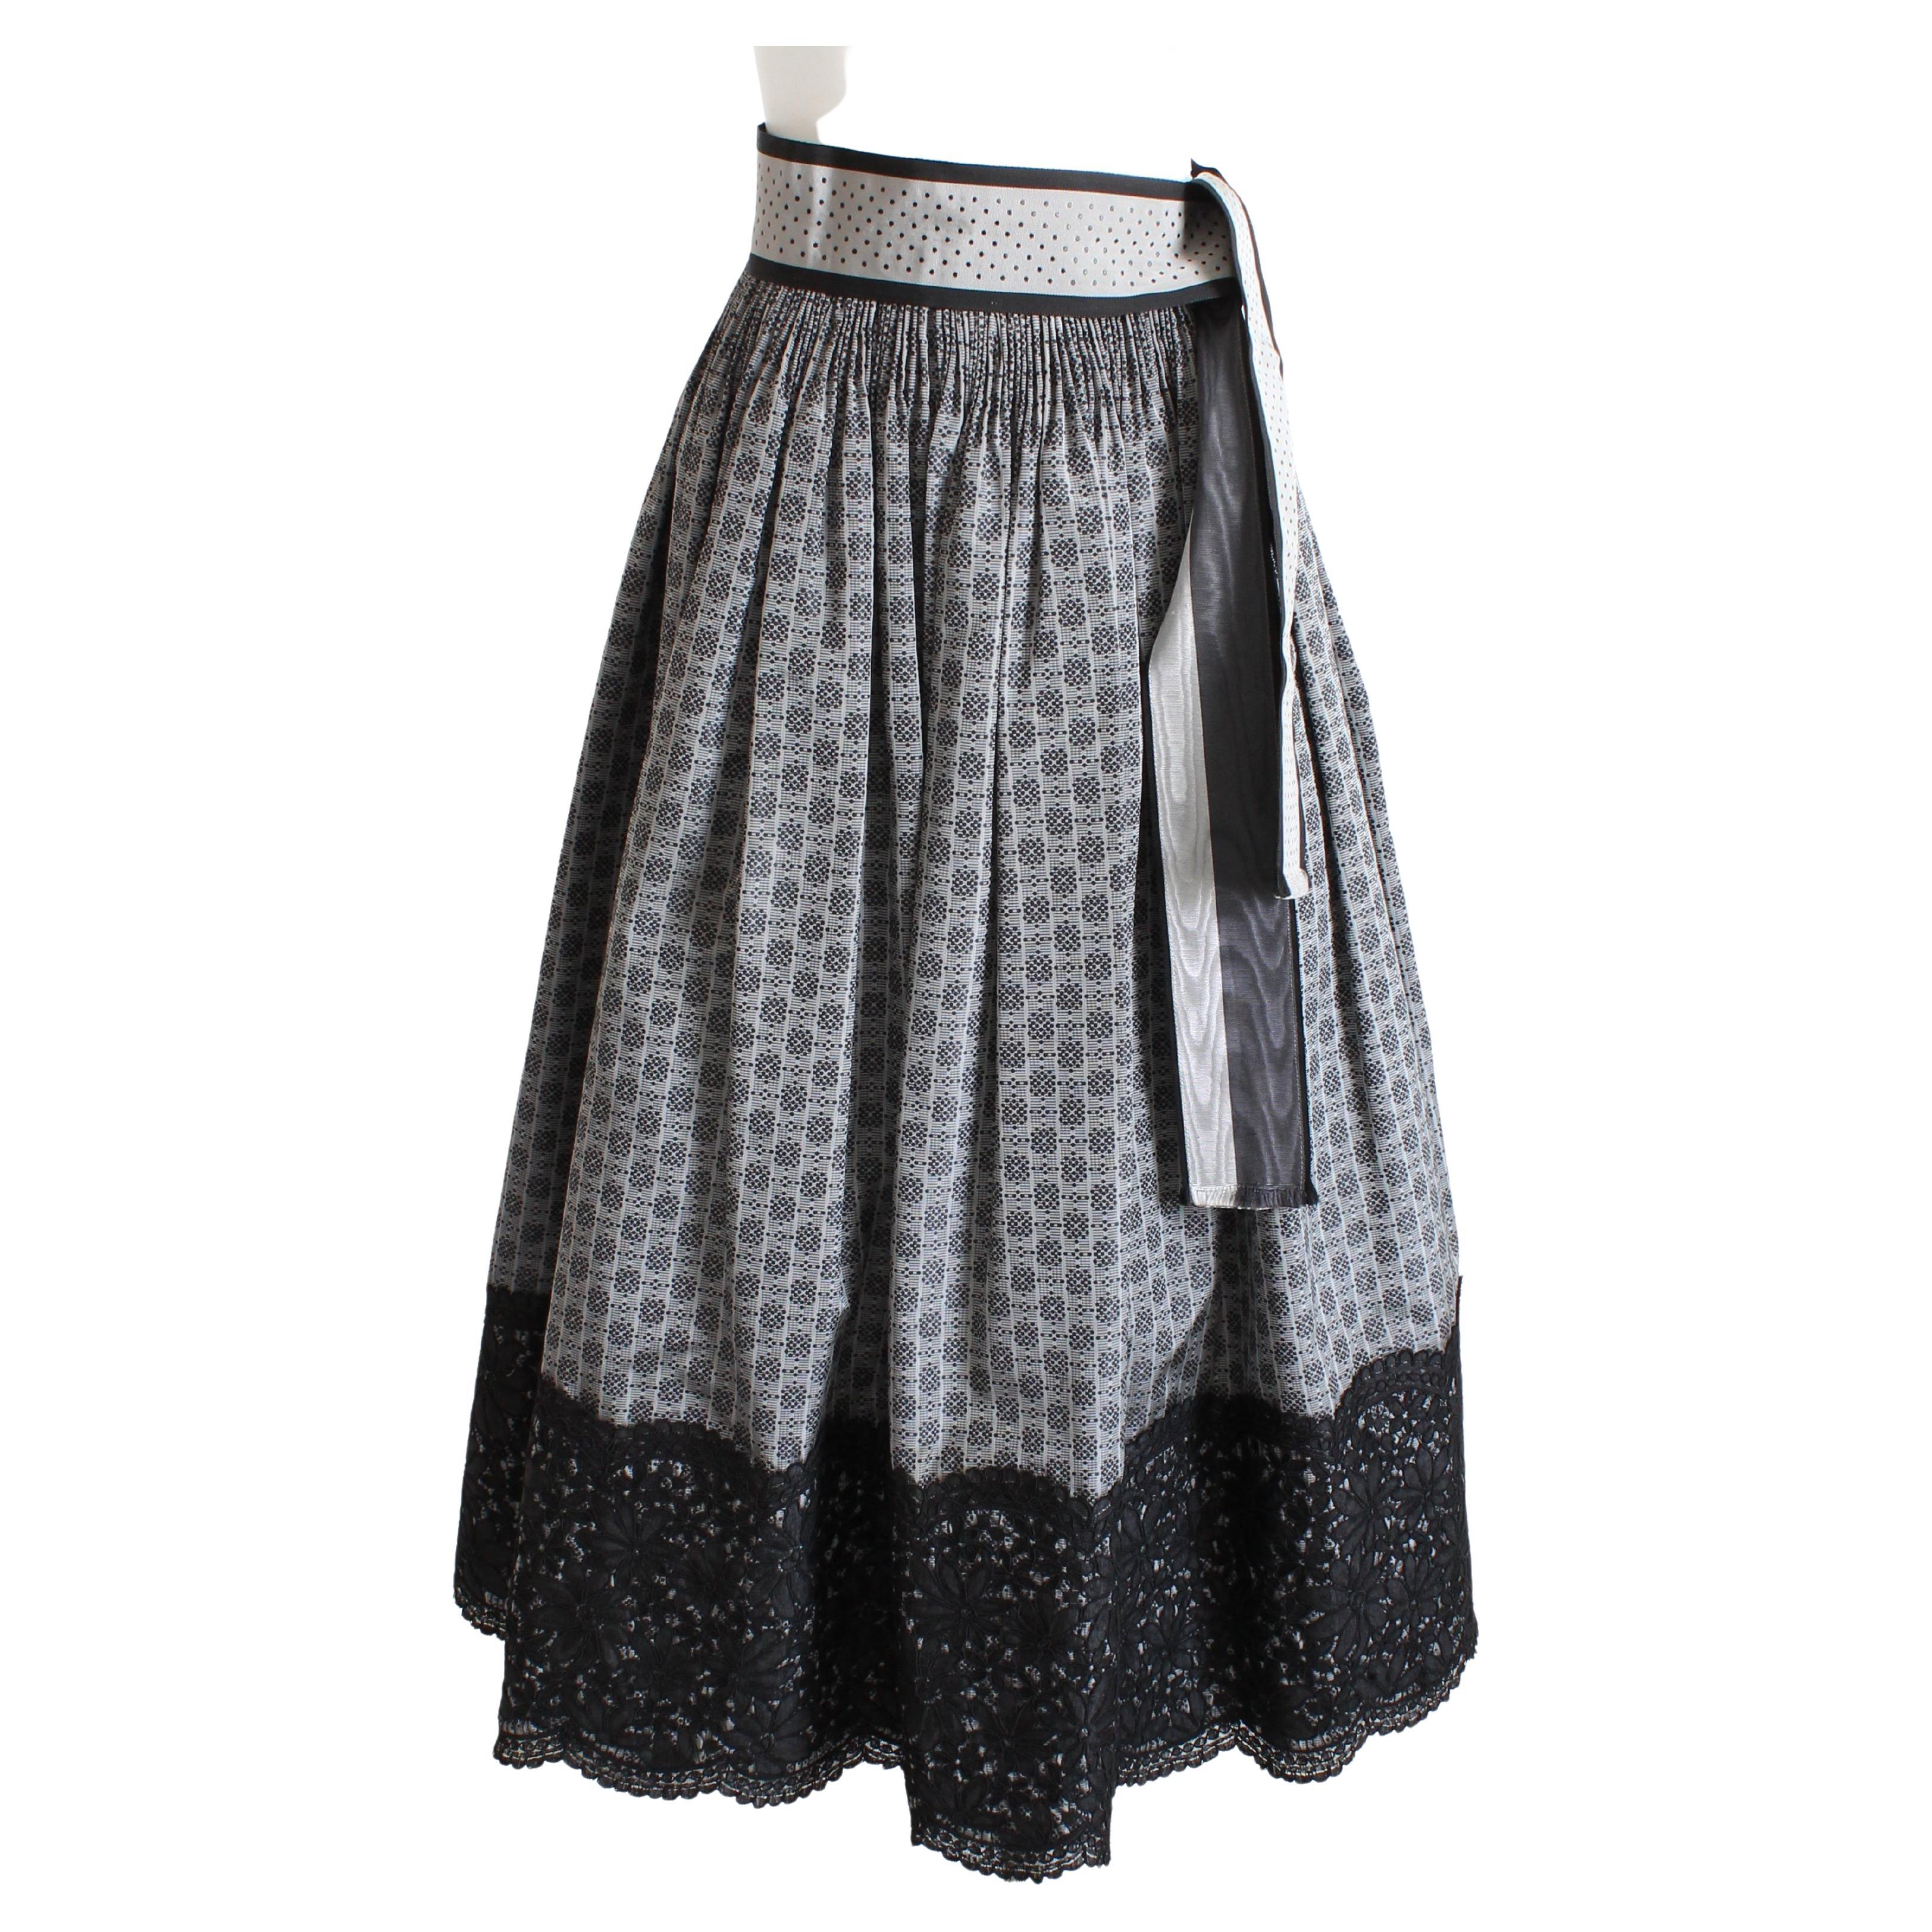 Geoffrey Beene Formal Skirt with Belt Taffeta Floor Length Black Lace Hem Sz 4